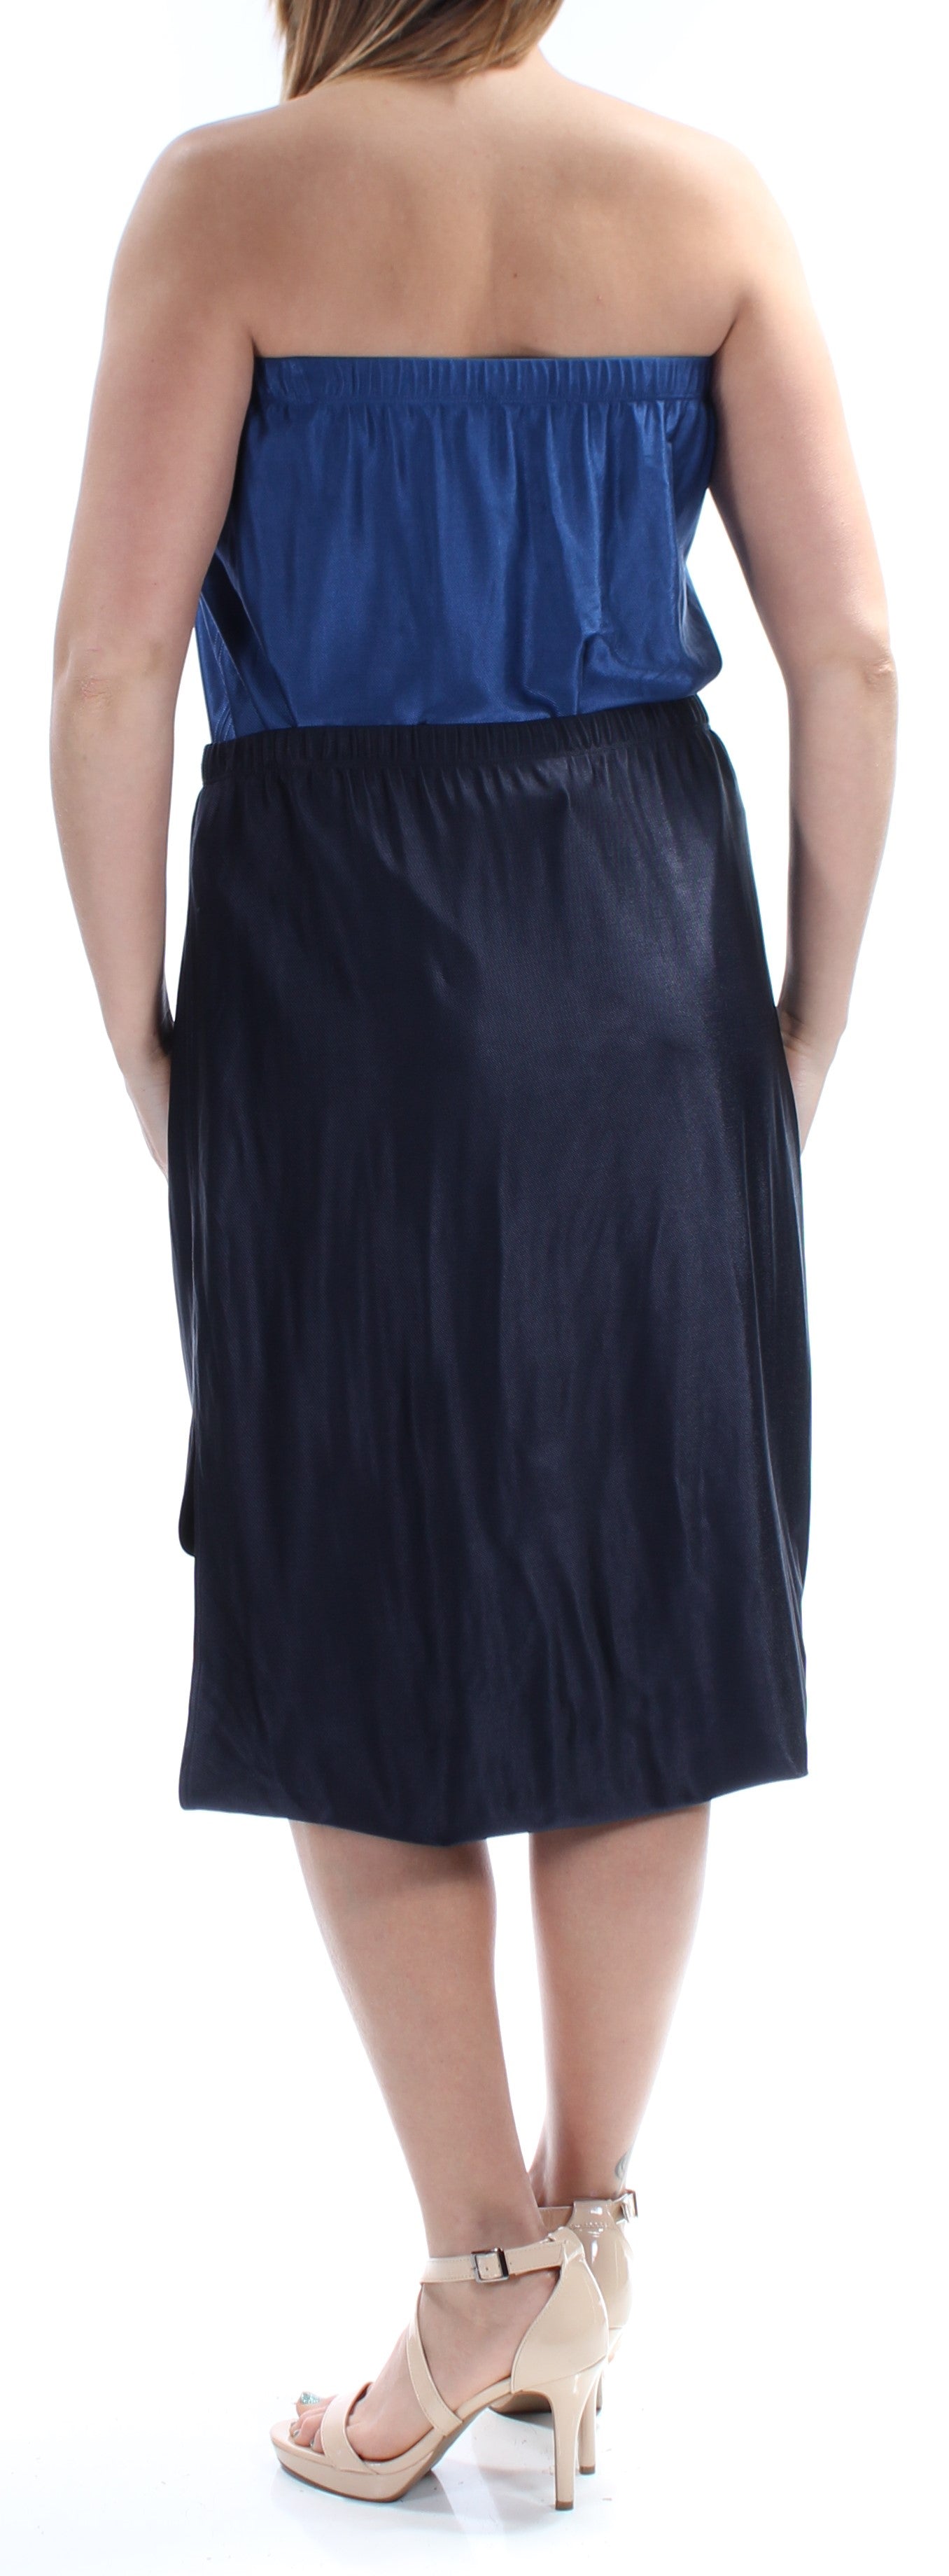 DKNY Womens Blue Color Block Sleeveless Strapless Below The Knee Hi-Lo Dress